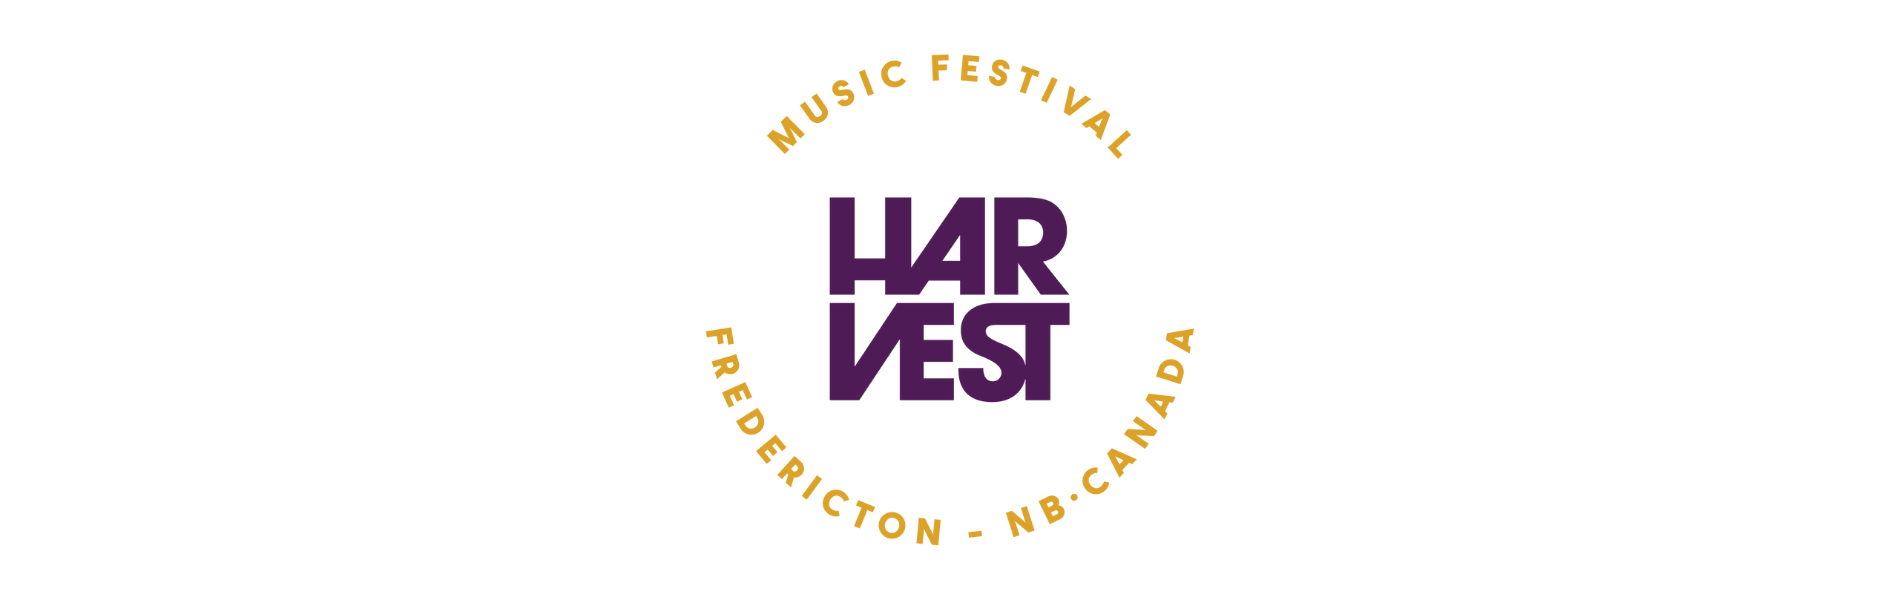 purple and yellow Harvest Music Festival logo